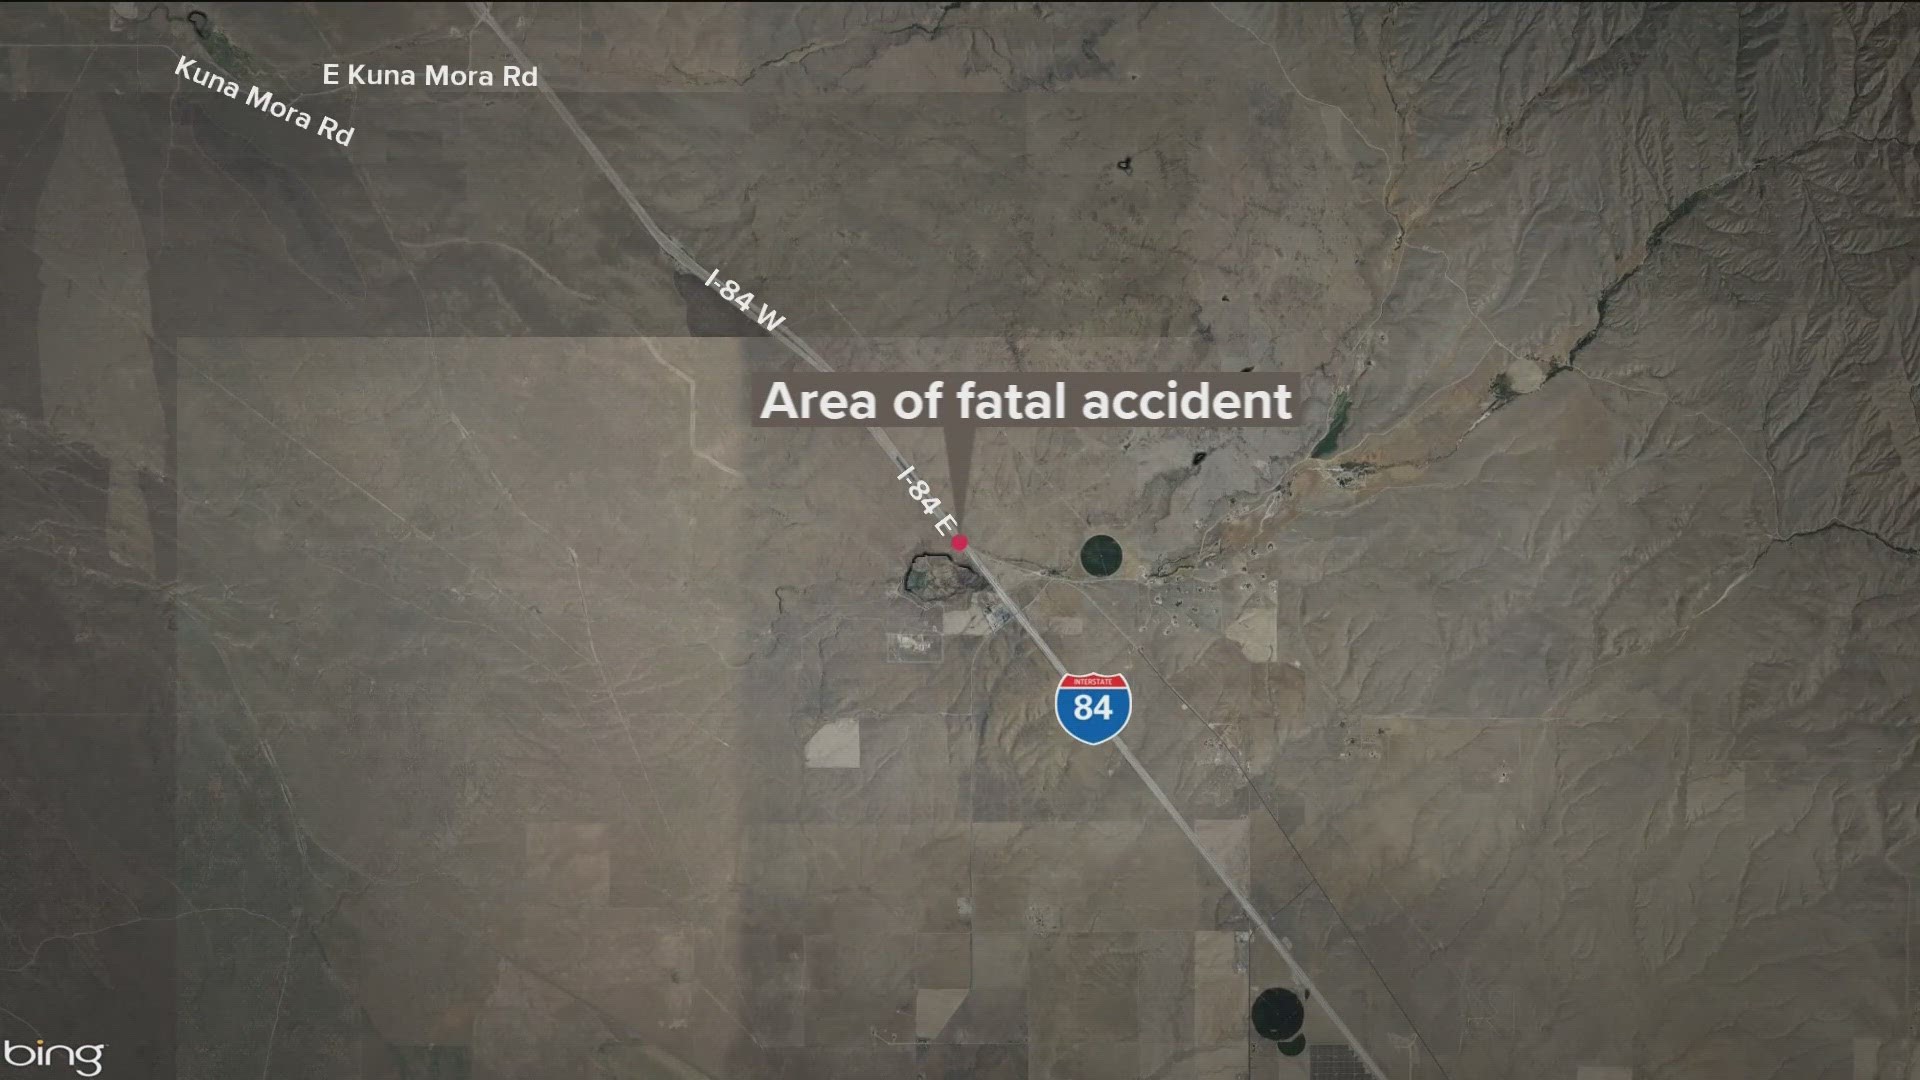 Coroner Ids Boise Man Killed In Rollover Crash 2 Others Hospitalized 0313